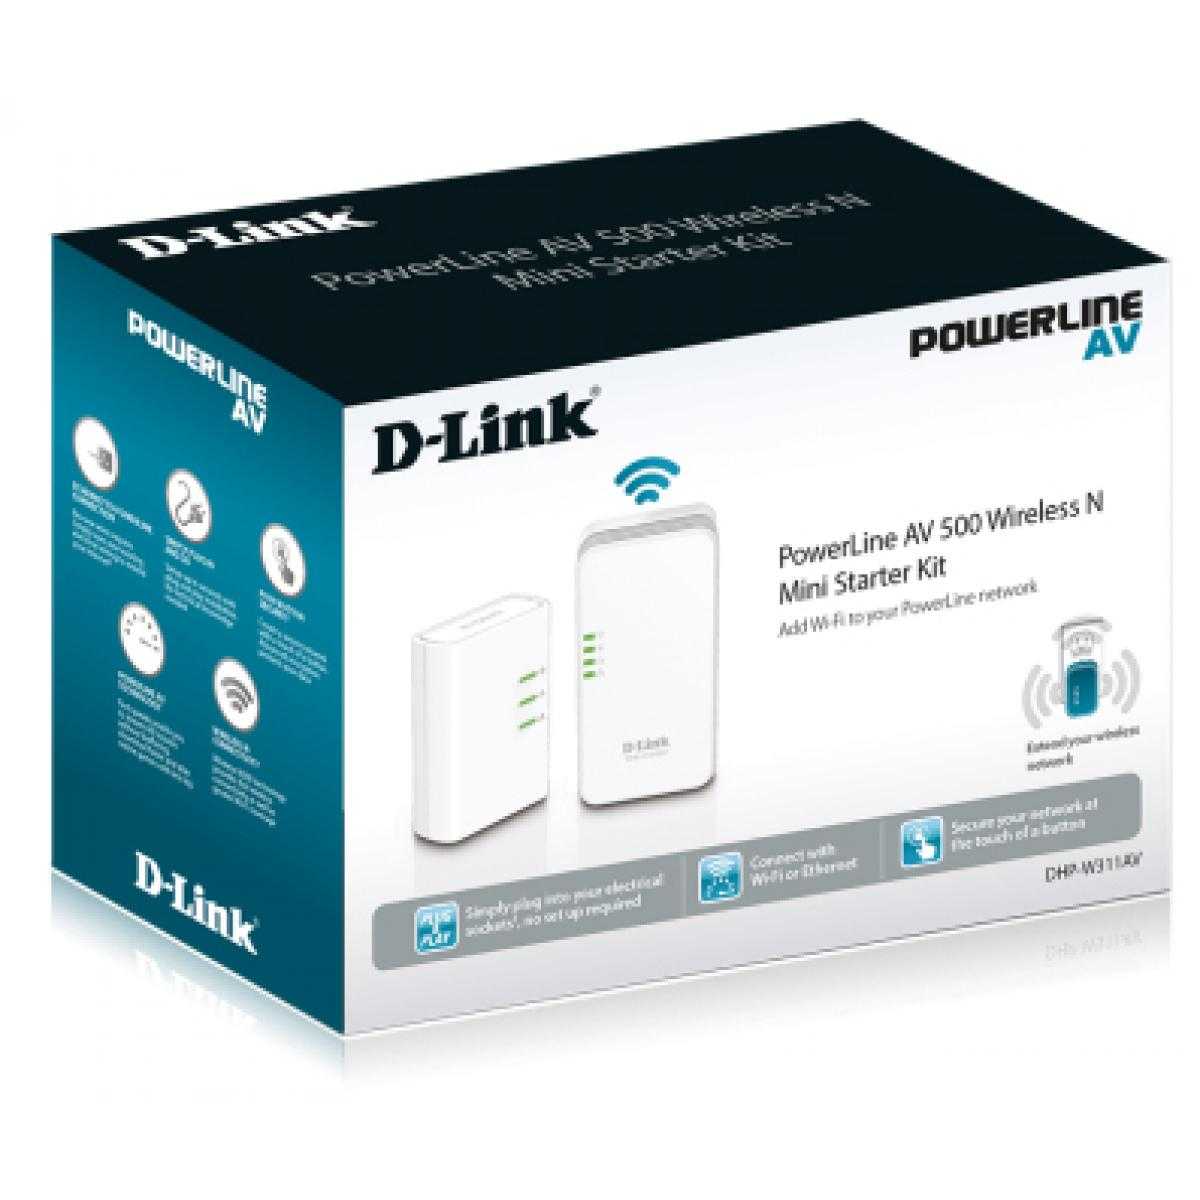 D-link dhp-w306av - купить , скидки, цена, отзывы, обзор, характеристики - wifi роутер, адаптер, bluetooth